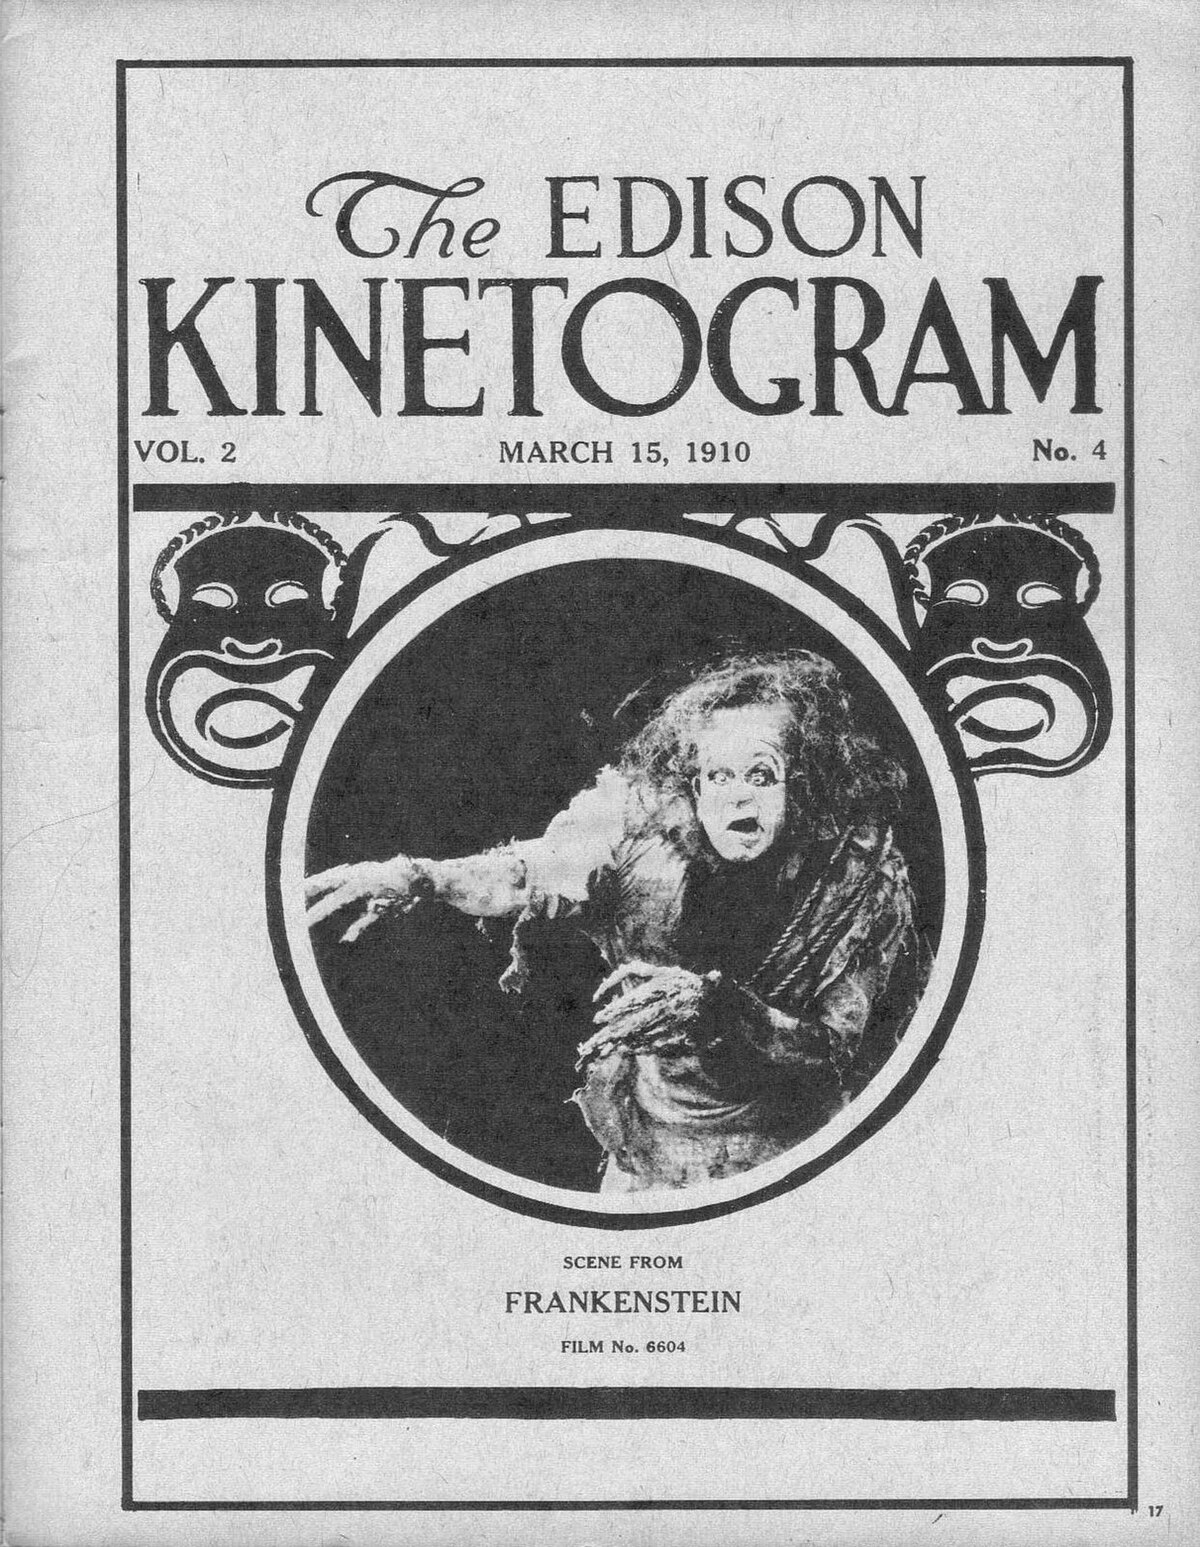 04 Apr 1922 - Advertising - Trove